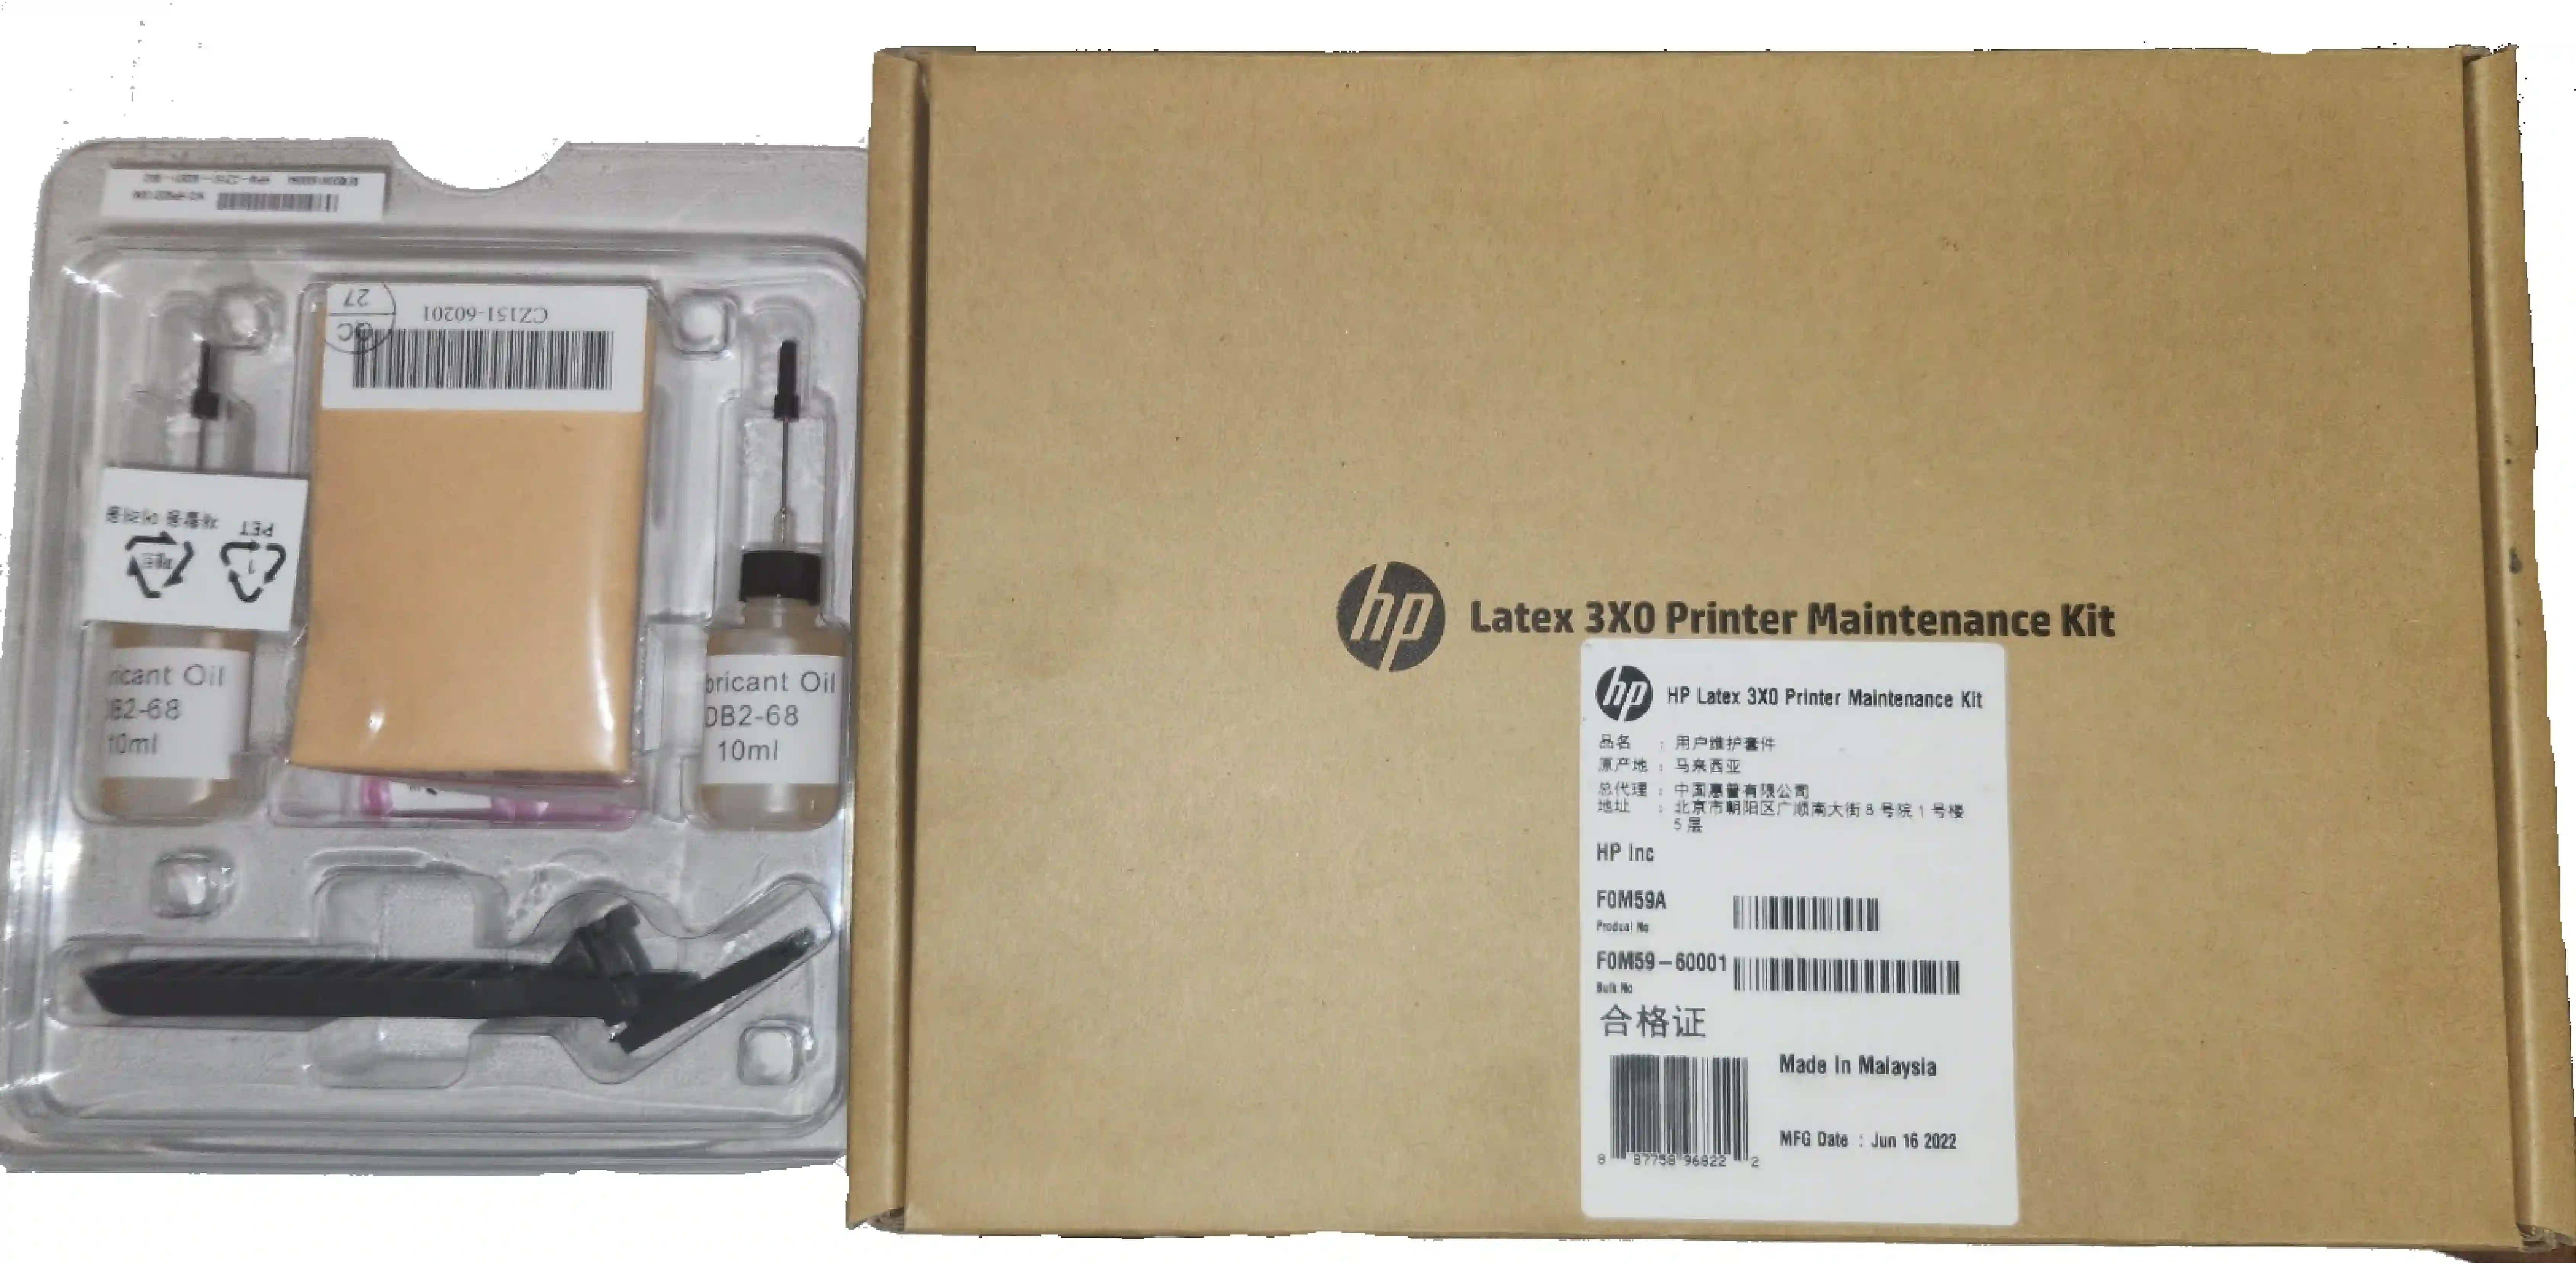 HP Latex 3xx Printer Maintenance Kit